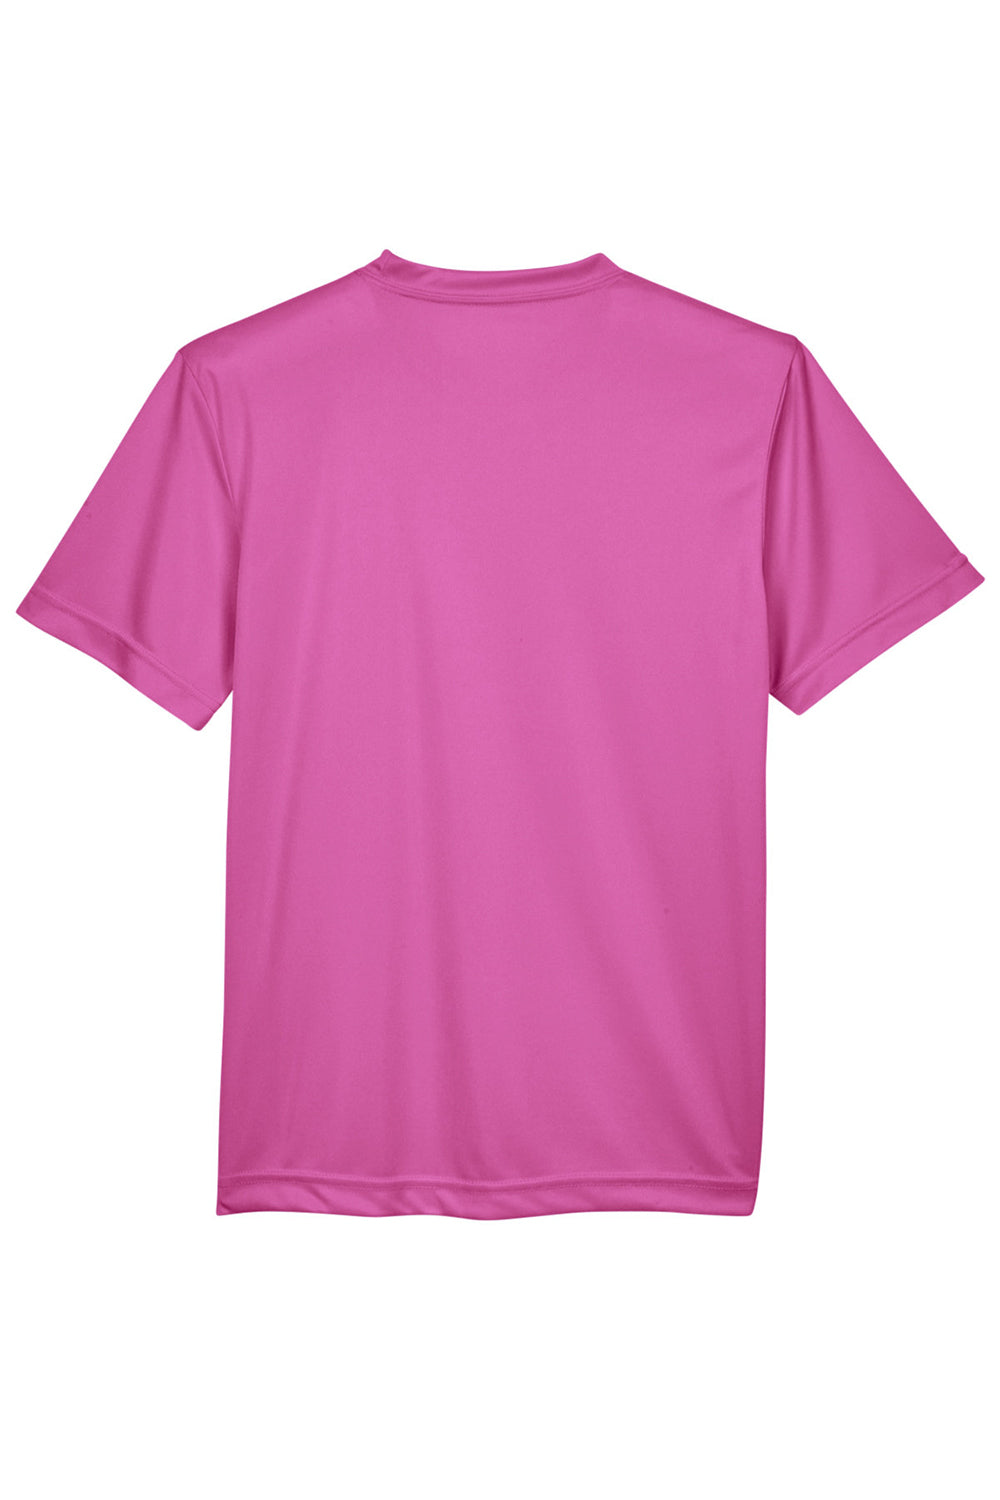 Team 365 TT11Y Youth Zone Performance Moisture Wicking Short Sleeve Crewneck T-Shirt Charity Pink Flat Back